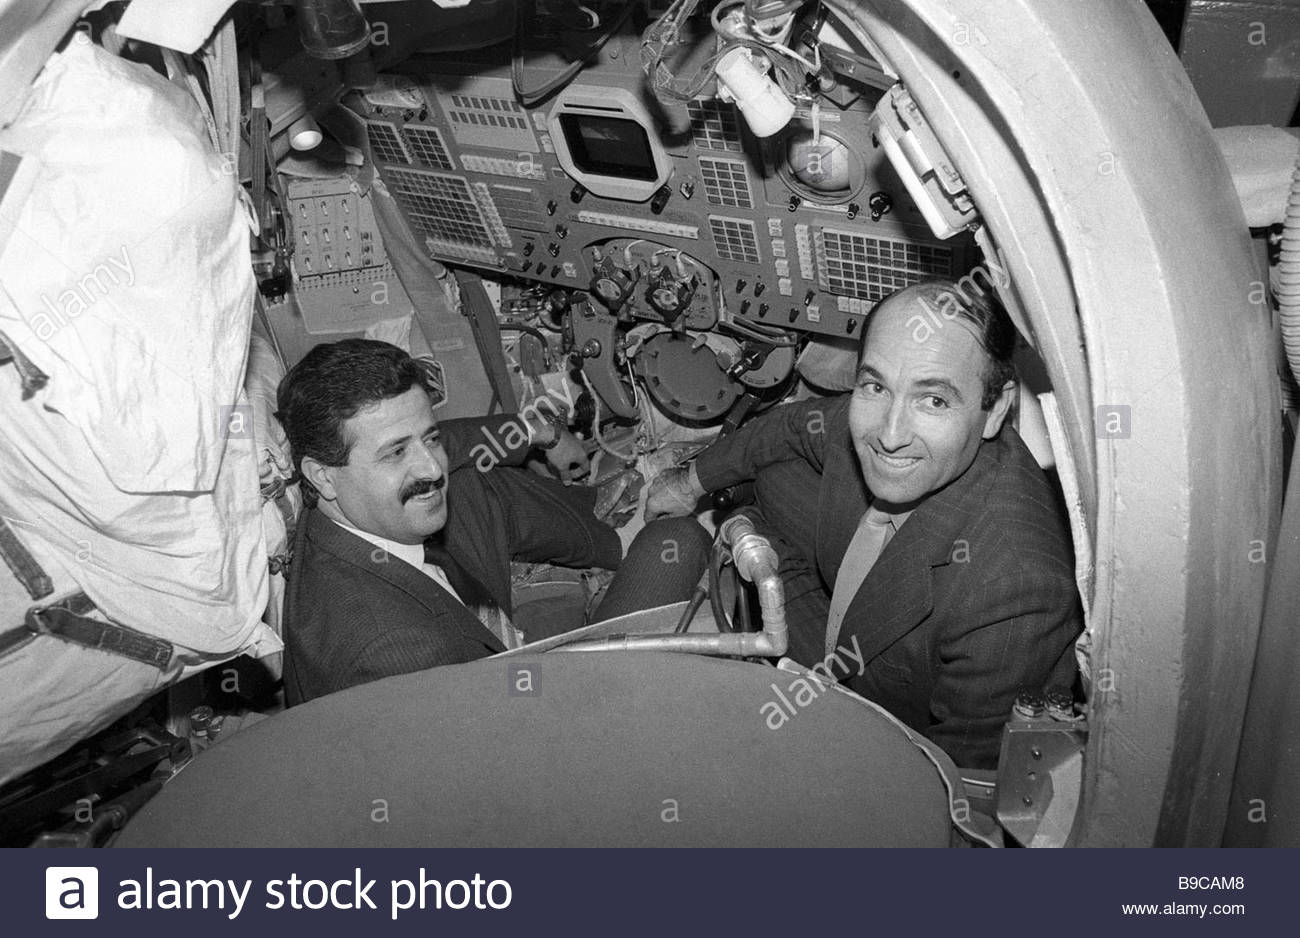 syrian-cosmonauts-muhammed-faris-right-and-munir-habib-left-inside-B9CAM8.jpg